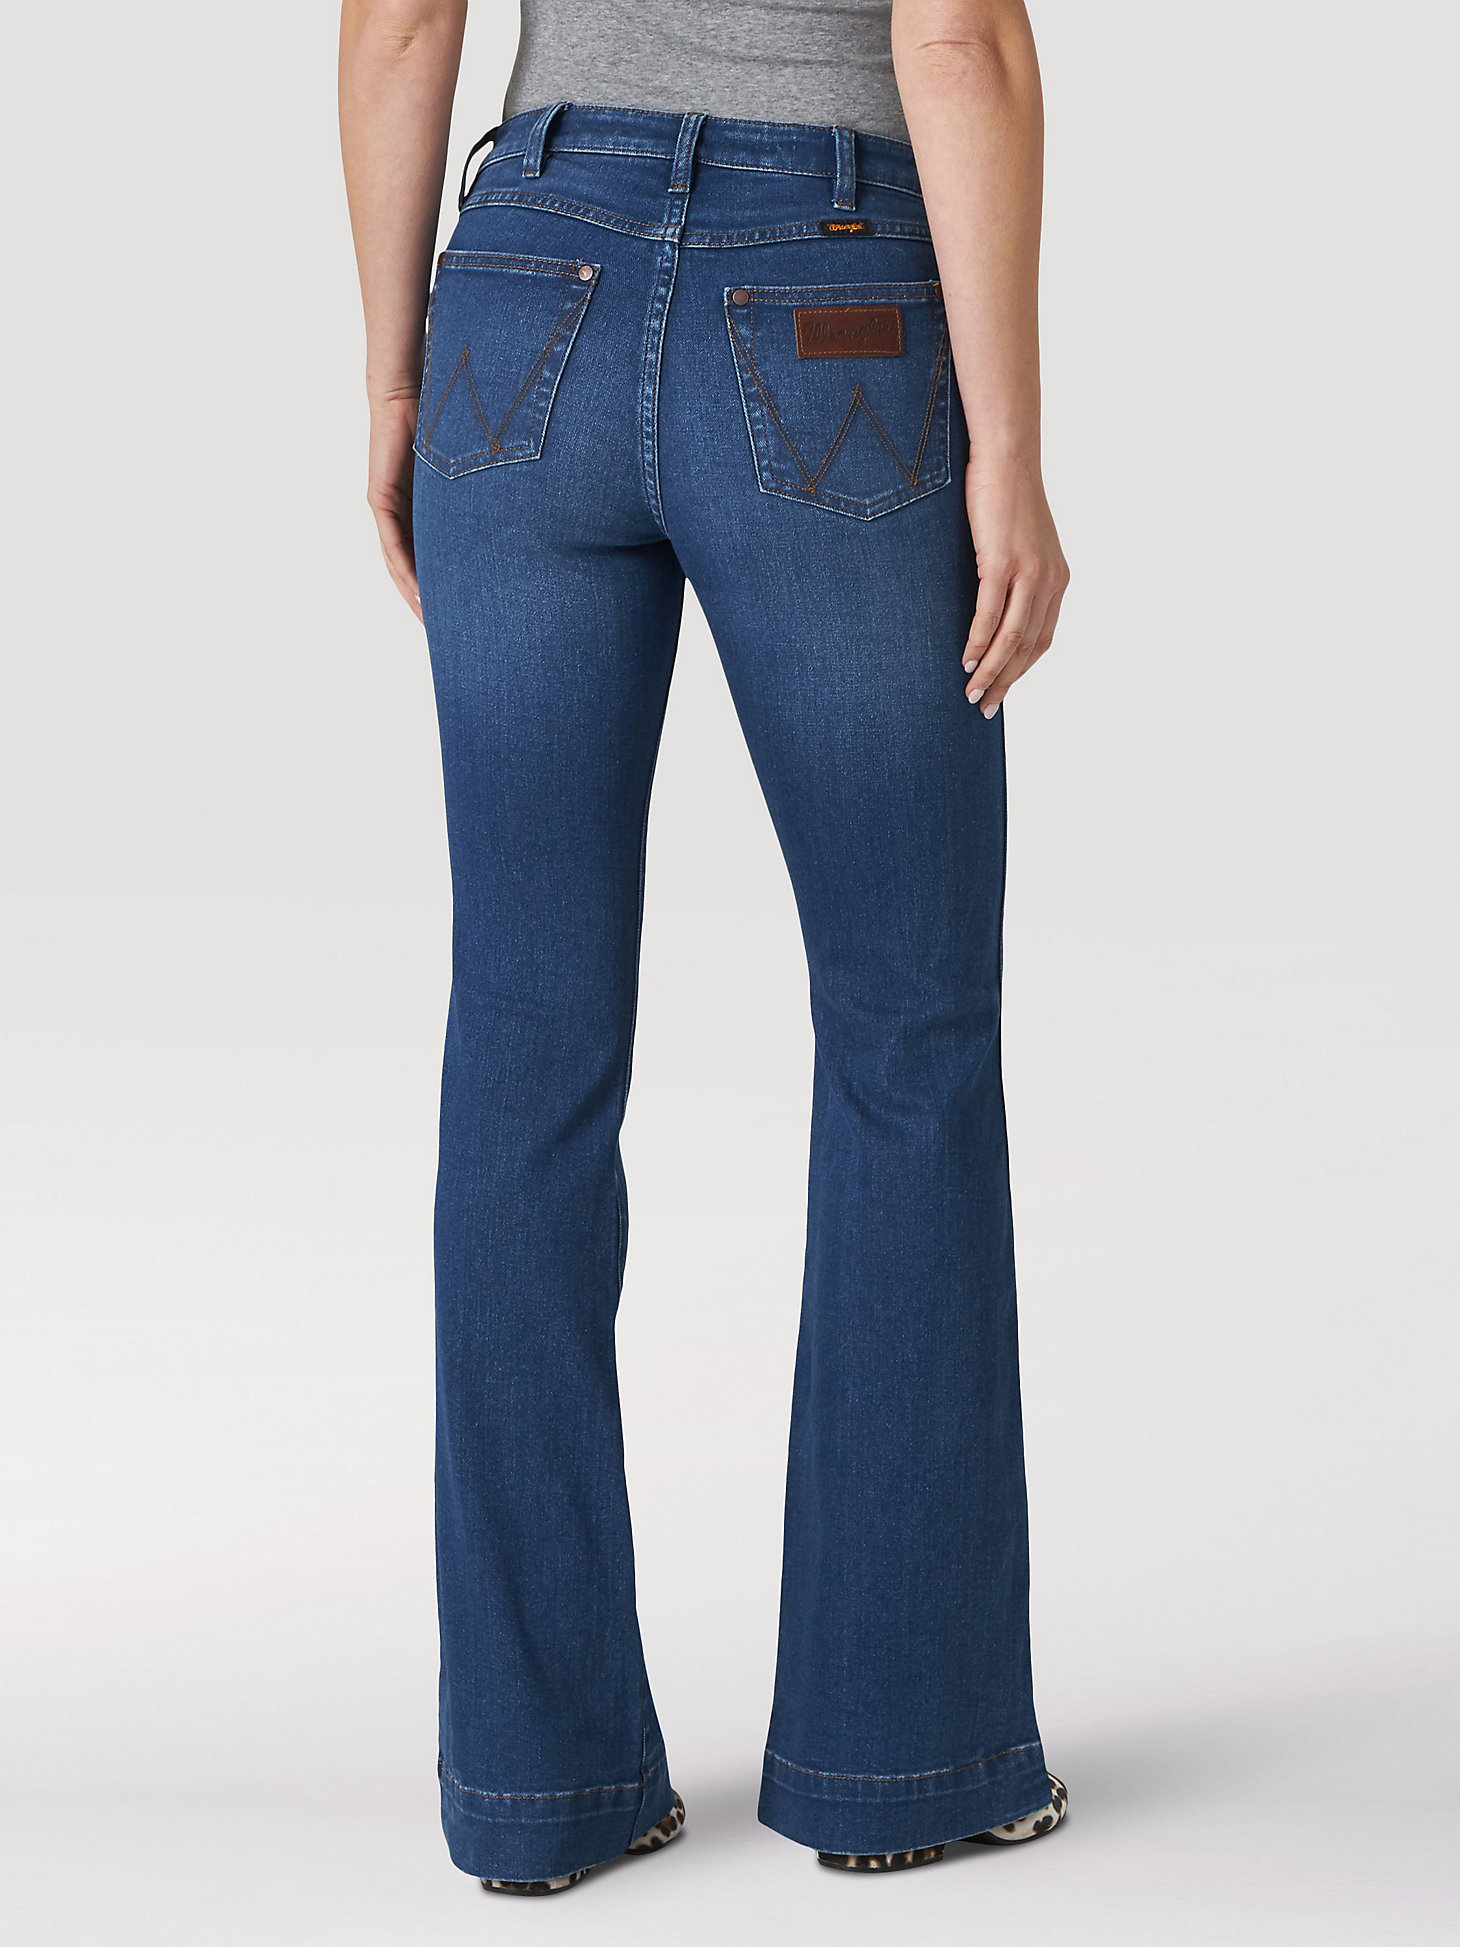 Women's Wrangler Retro® High Rise Trouser Jean in Blair alternative view 1